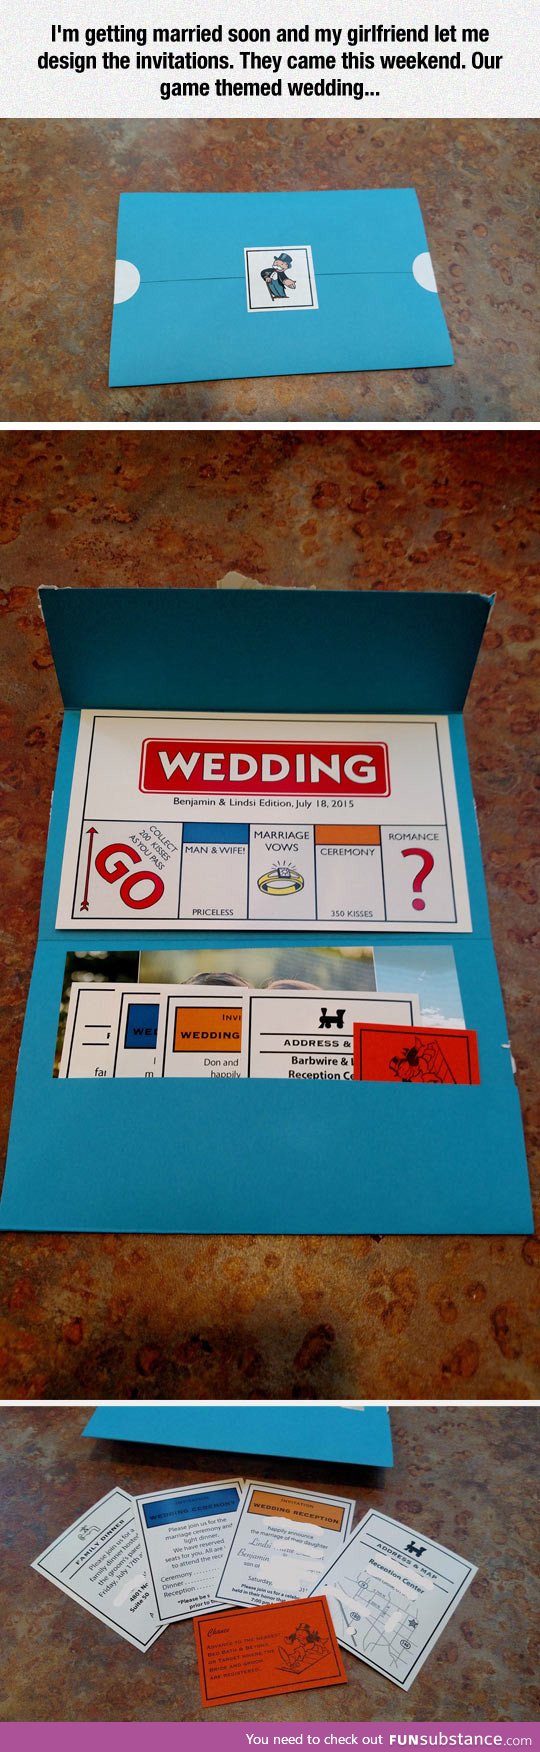 Game themed wedding invitations